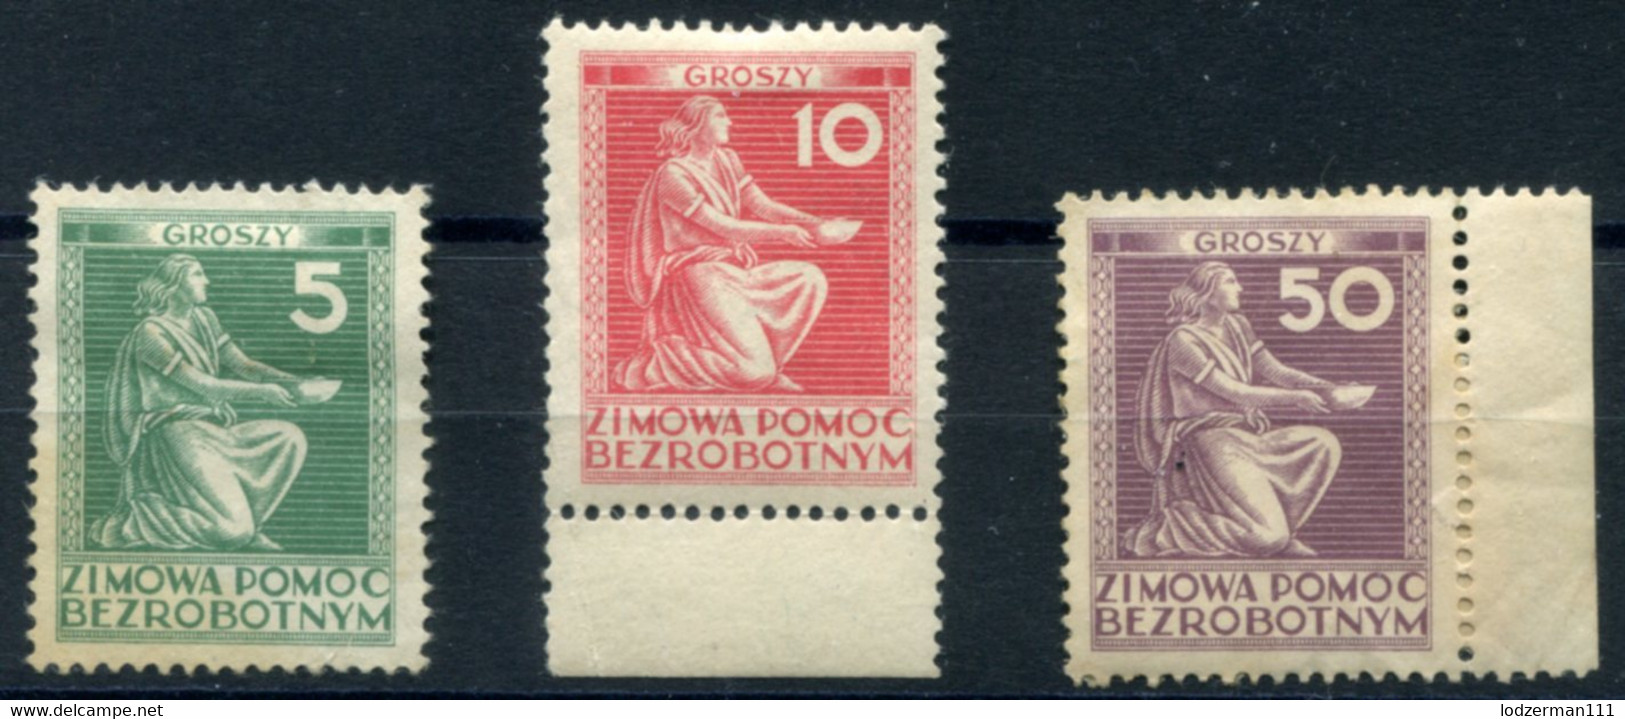 1935 Surtax BEZROBOTNYM (unemployment) - 3 Stamps (MNG-MH) Rare - Revenue Stamps